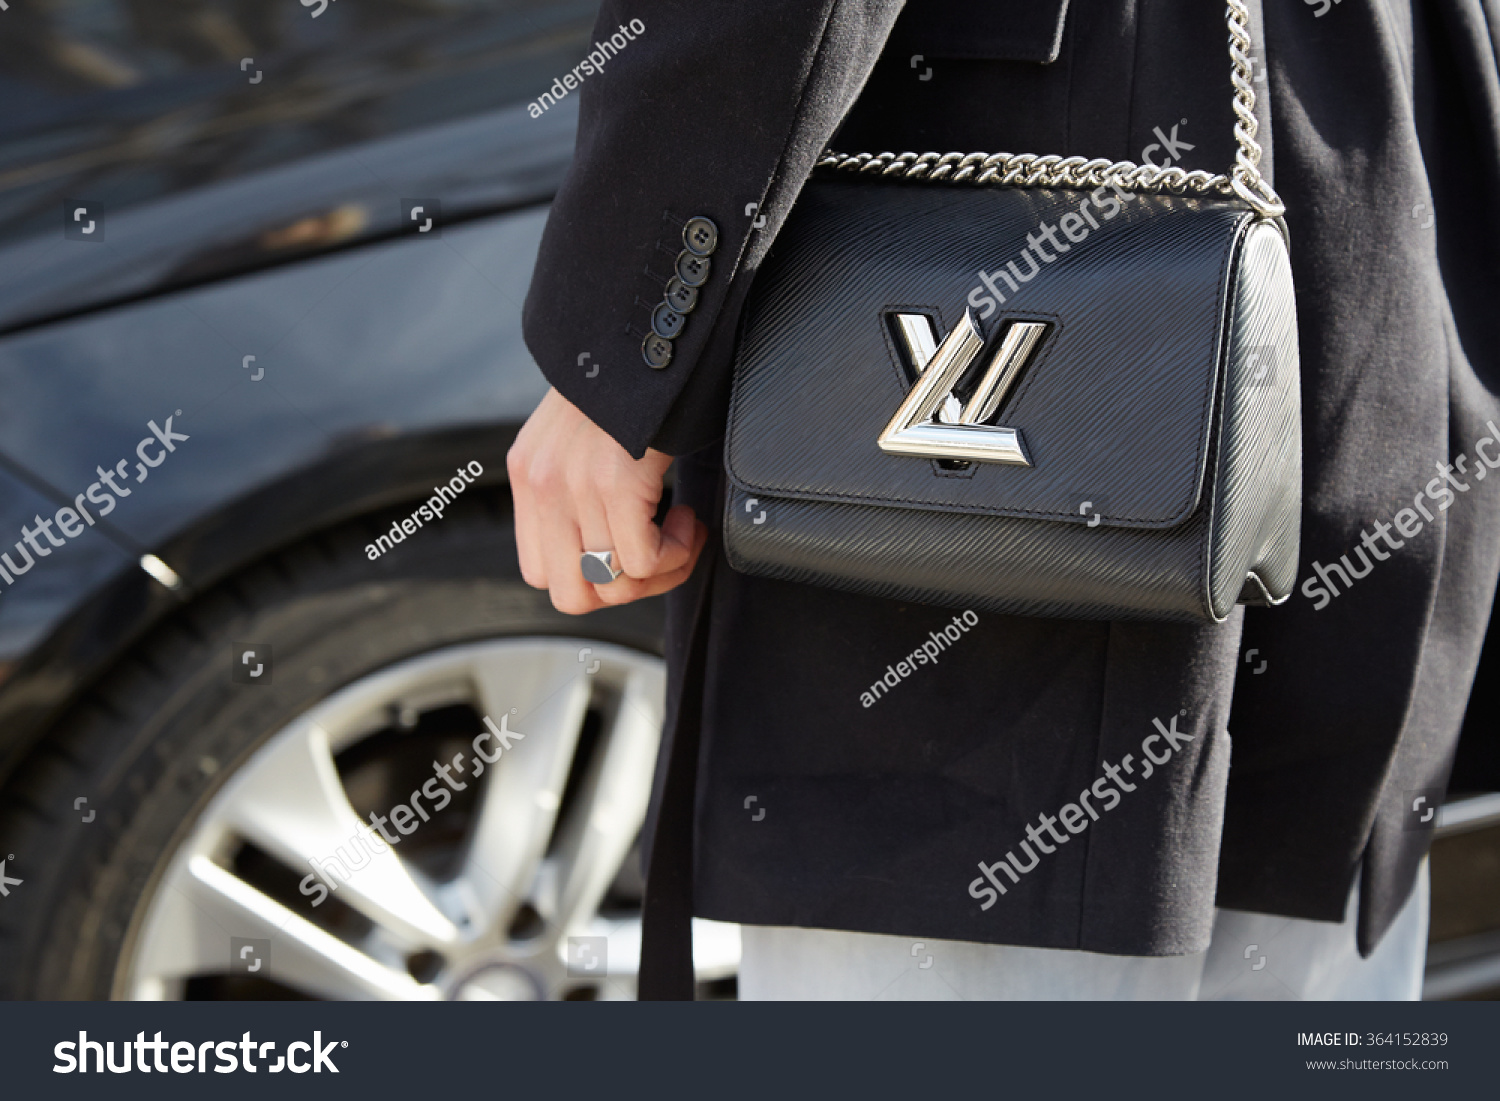 Milan January 18 Woman Louis Vuitton Stock Photo 364152839 - Shutterstock